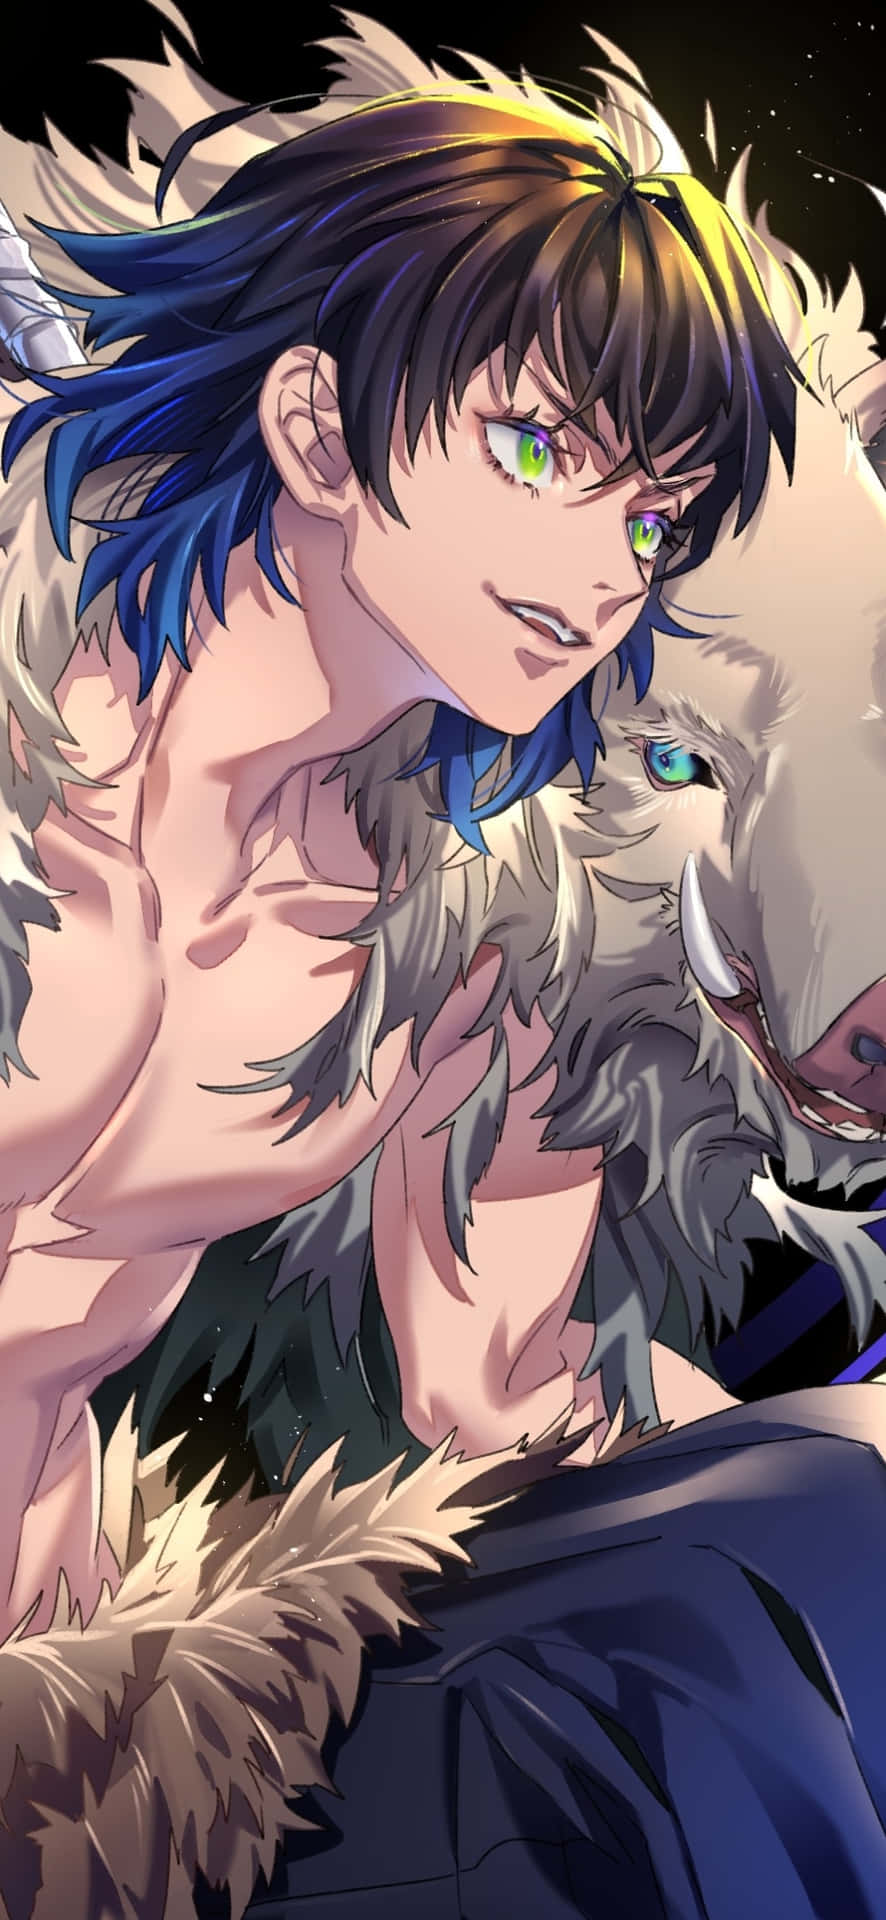 En dreng med blåt hår og en ulv på hans skulder. Wallpaper